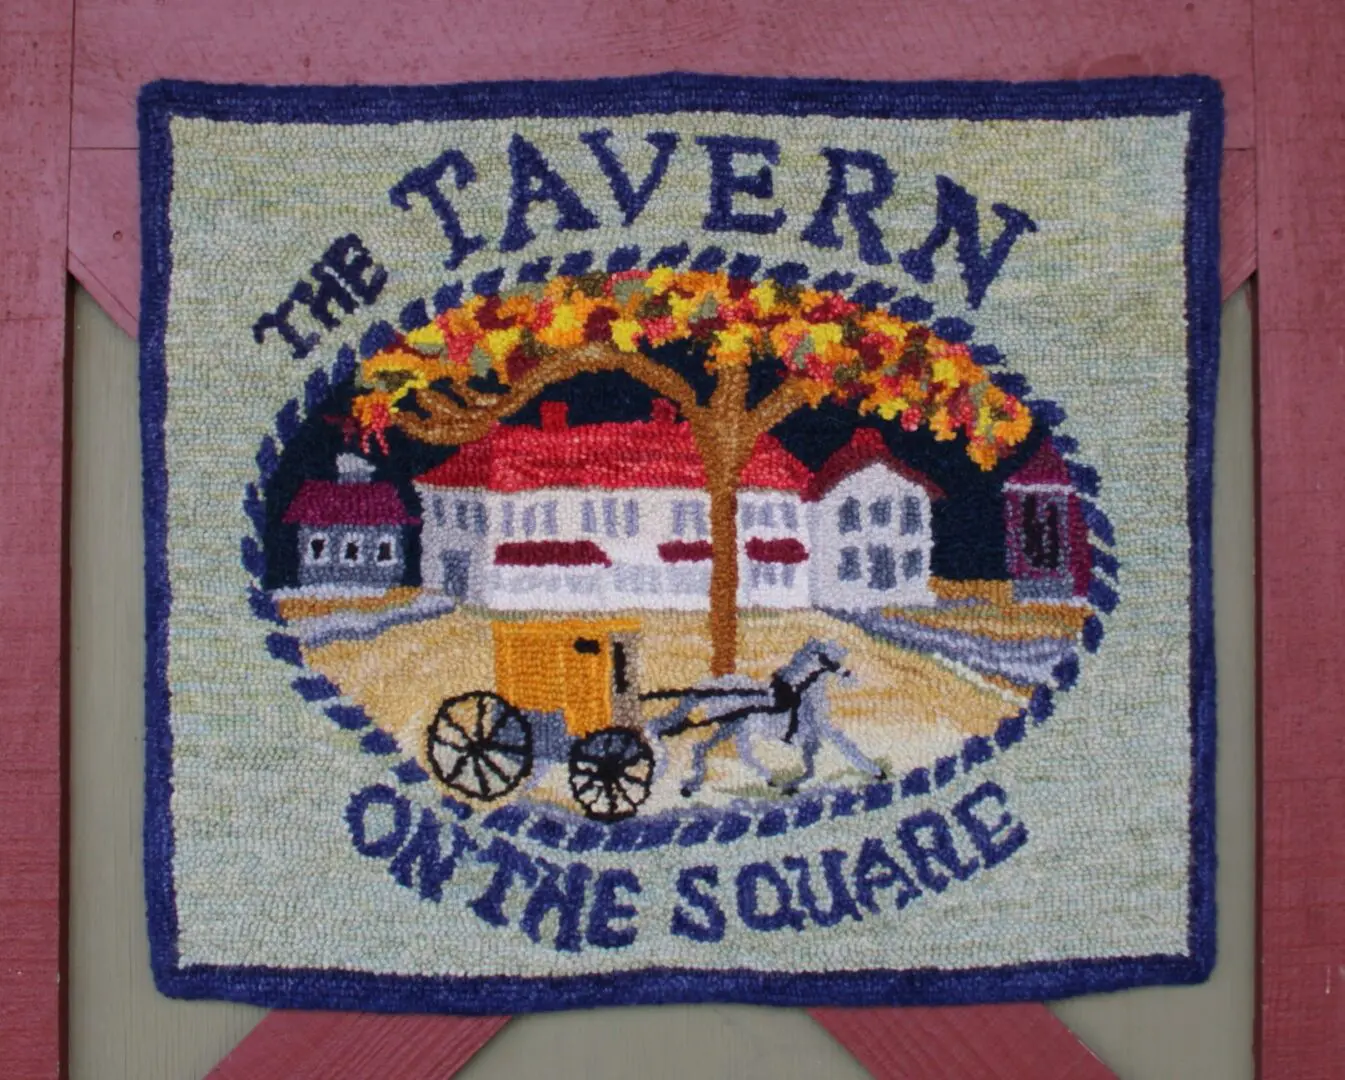 A tavern rug